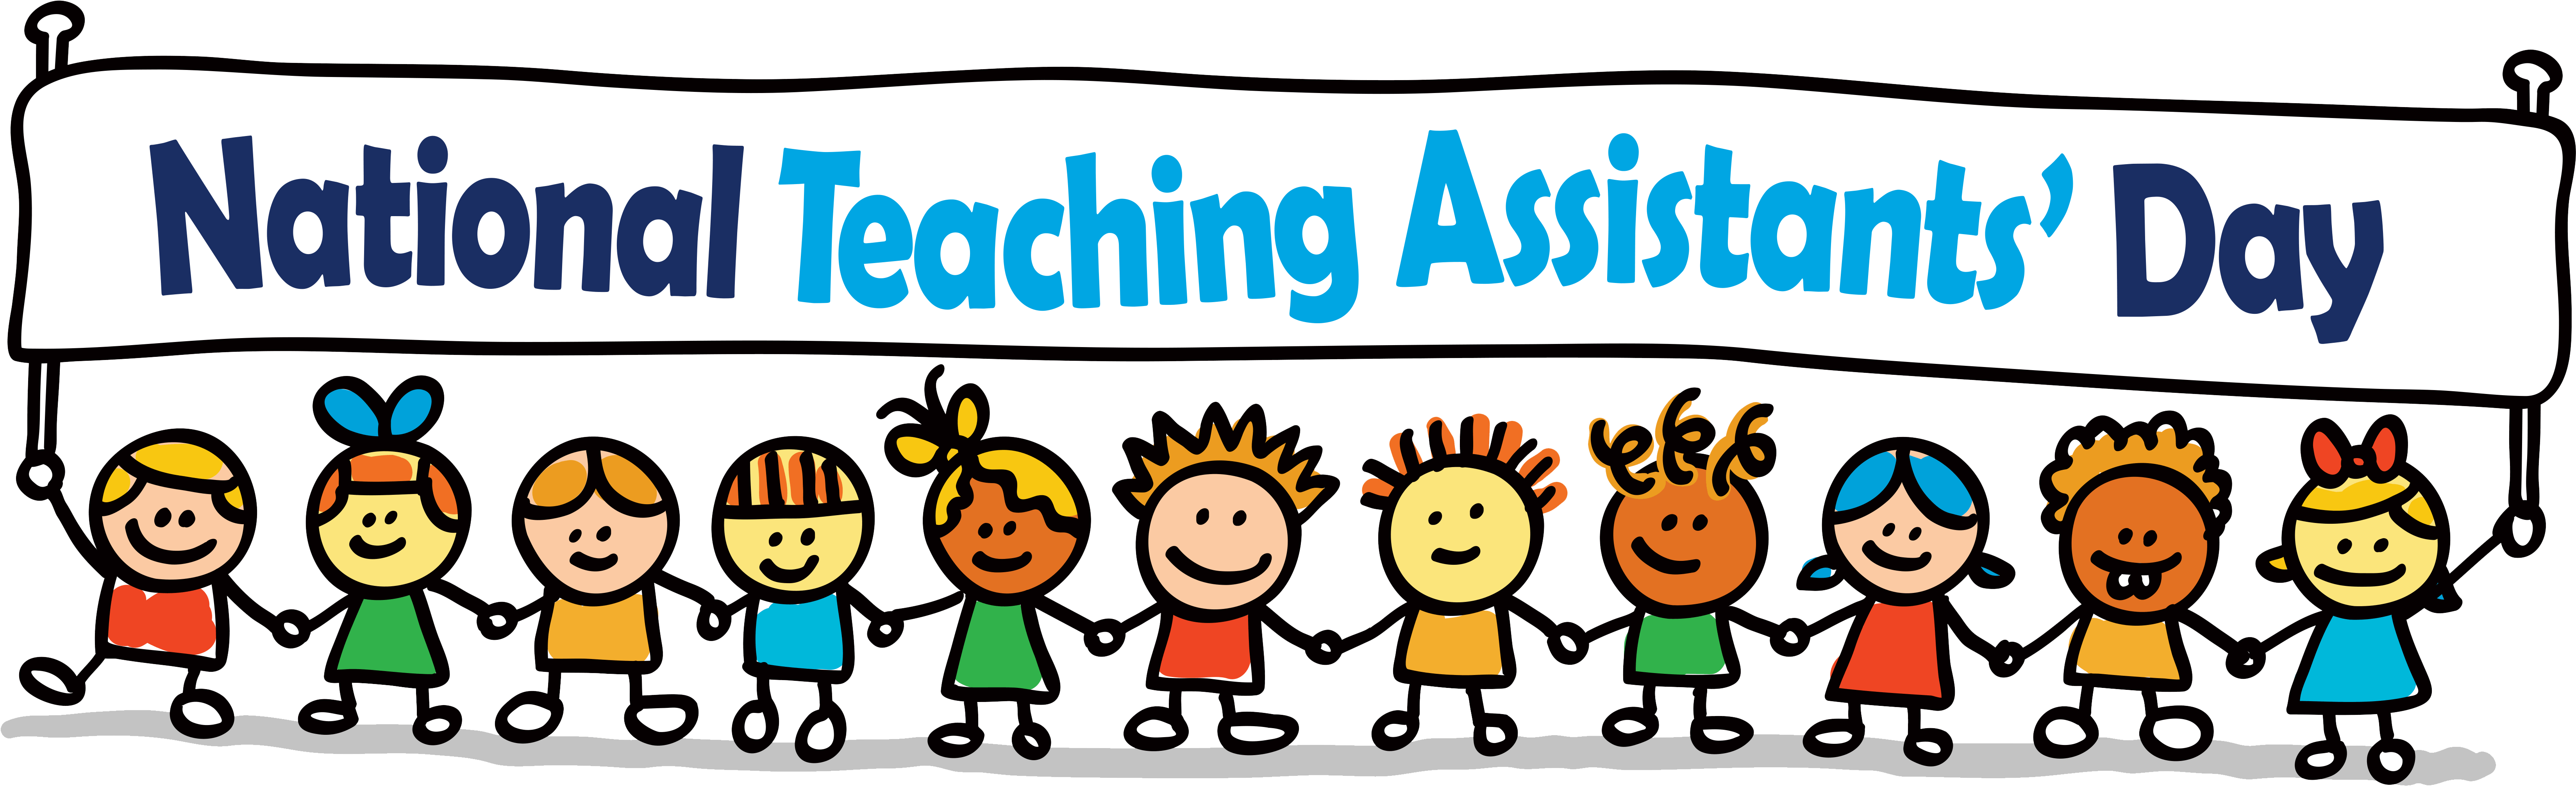 National Teaching Assistants Awareness - Teacher Assistant Appreciation Day 2018 (7311x2630)